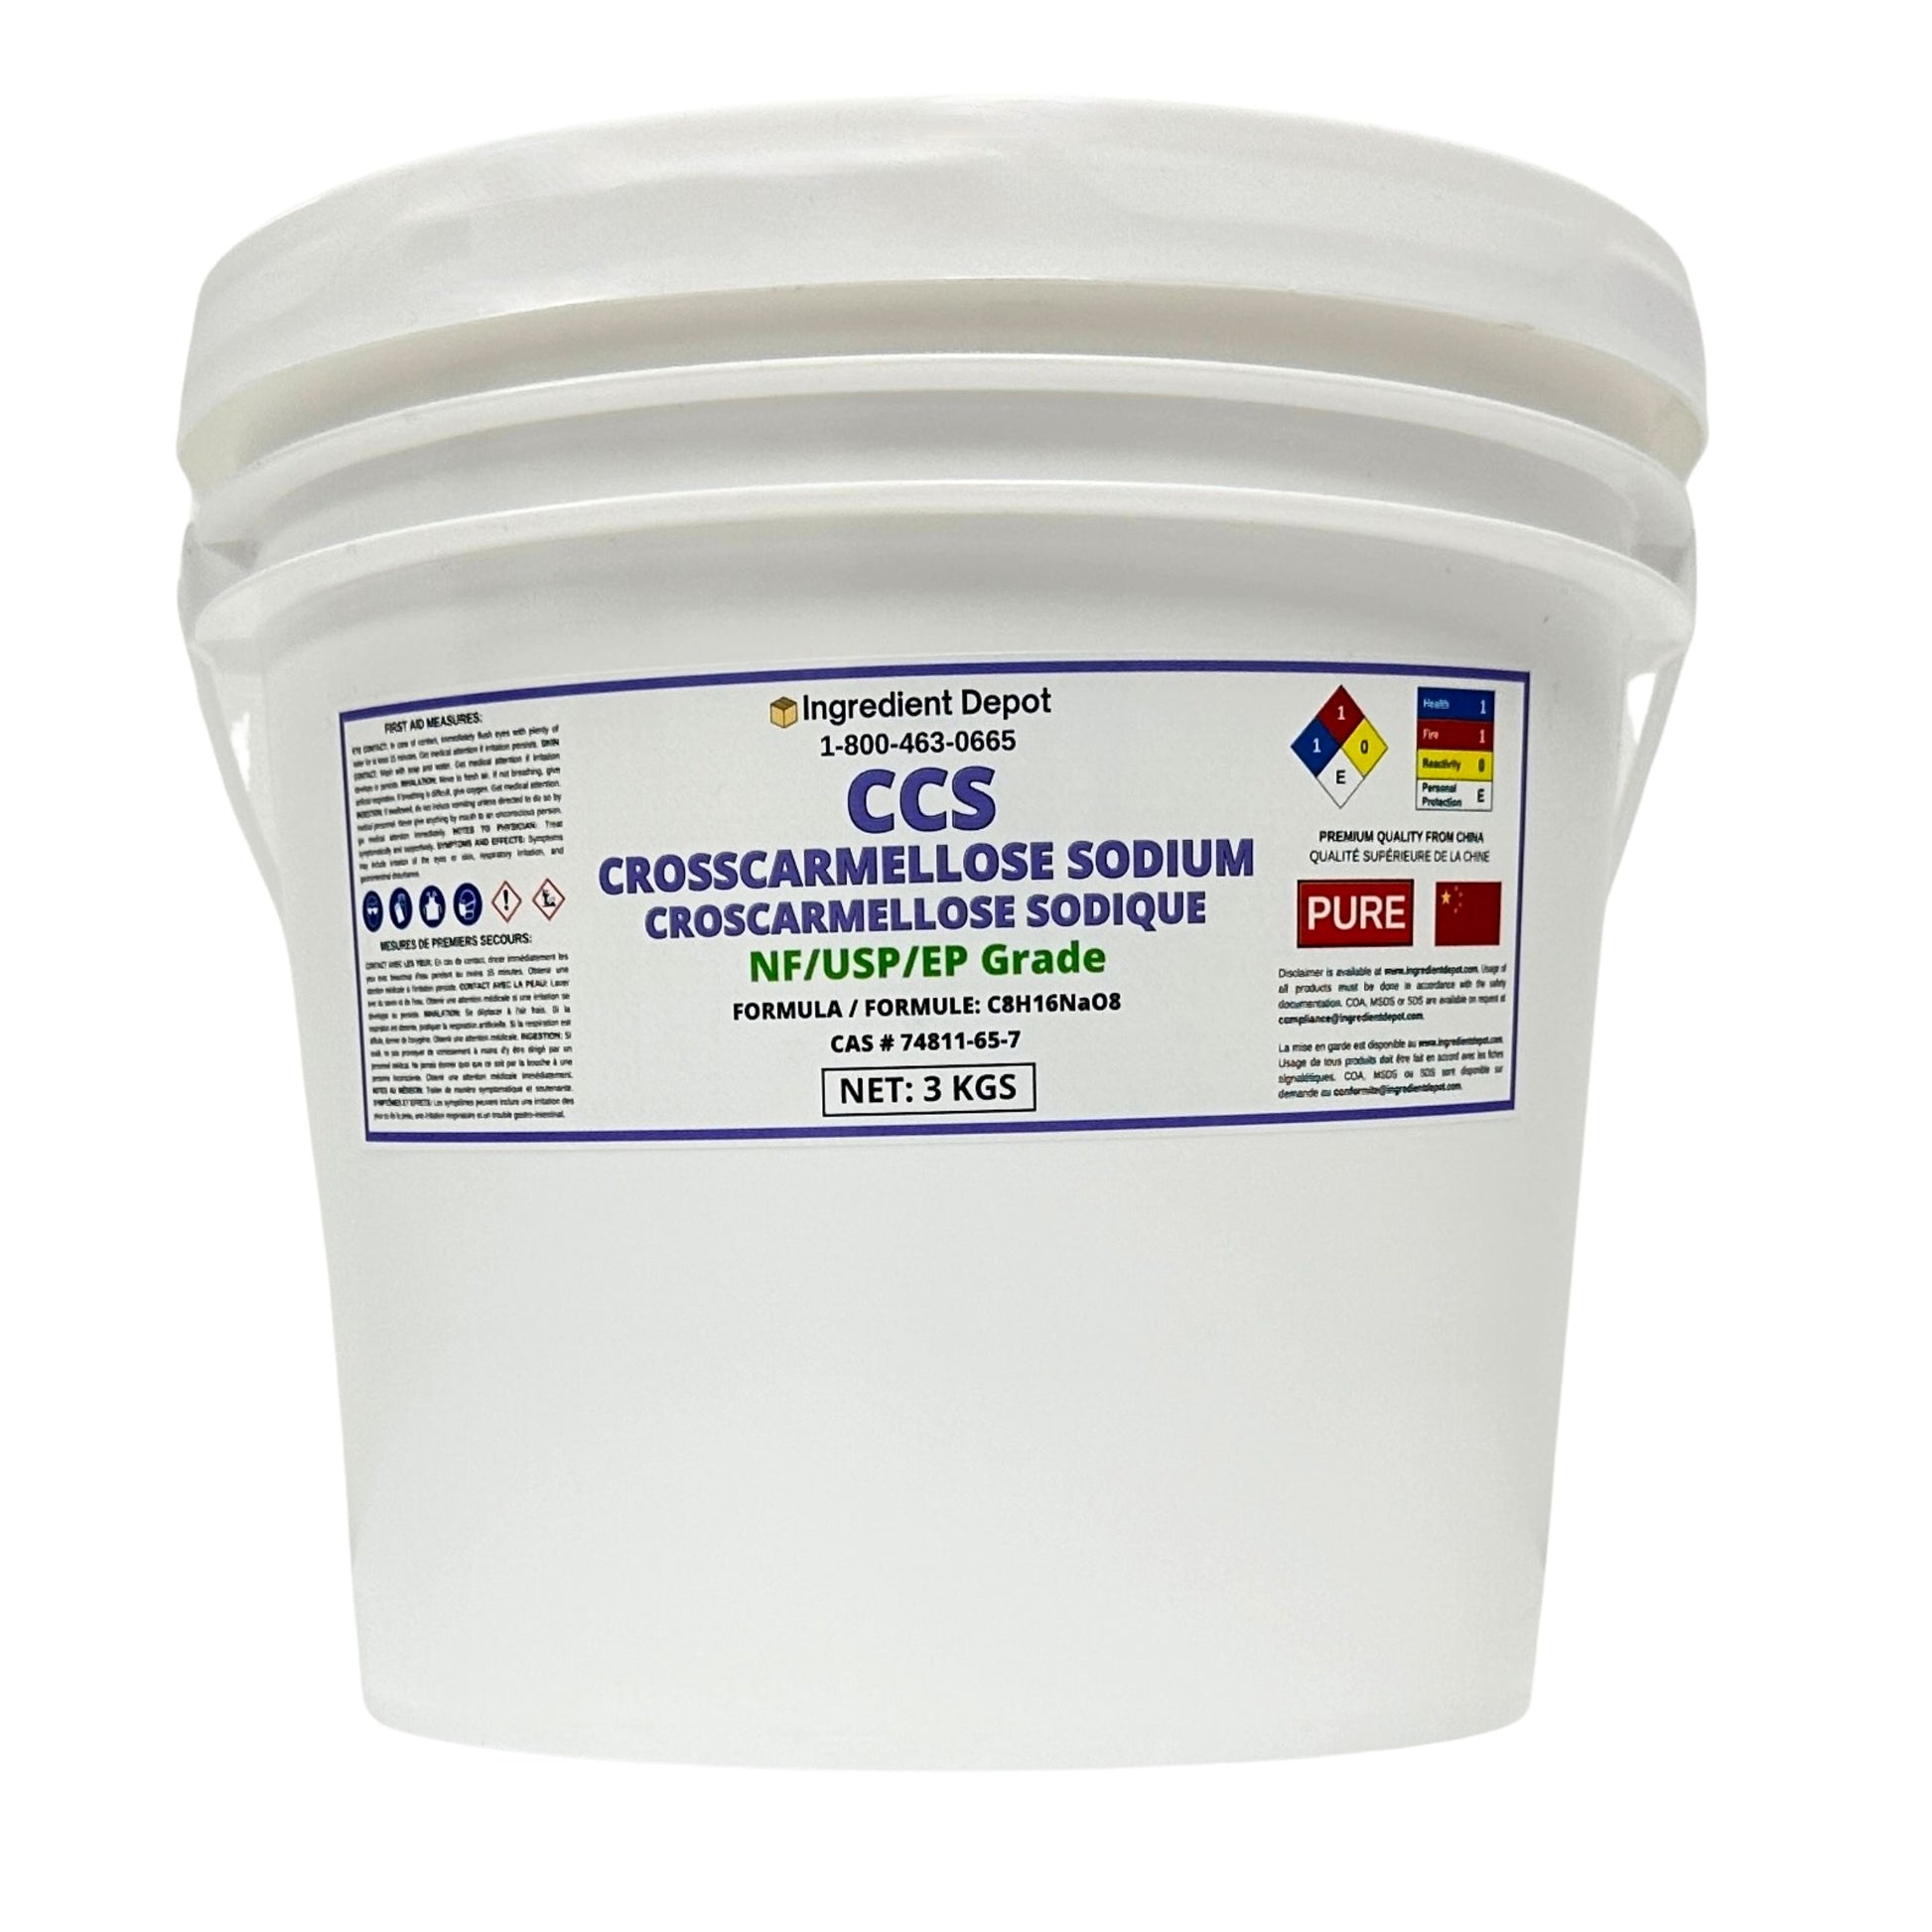 Crosscarmellose Sodium CCS - NF/USP/EP Grade 3 kgs - Ingredient Depot